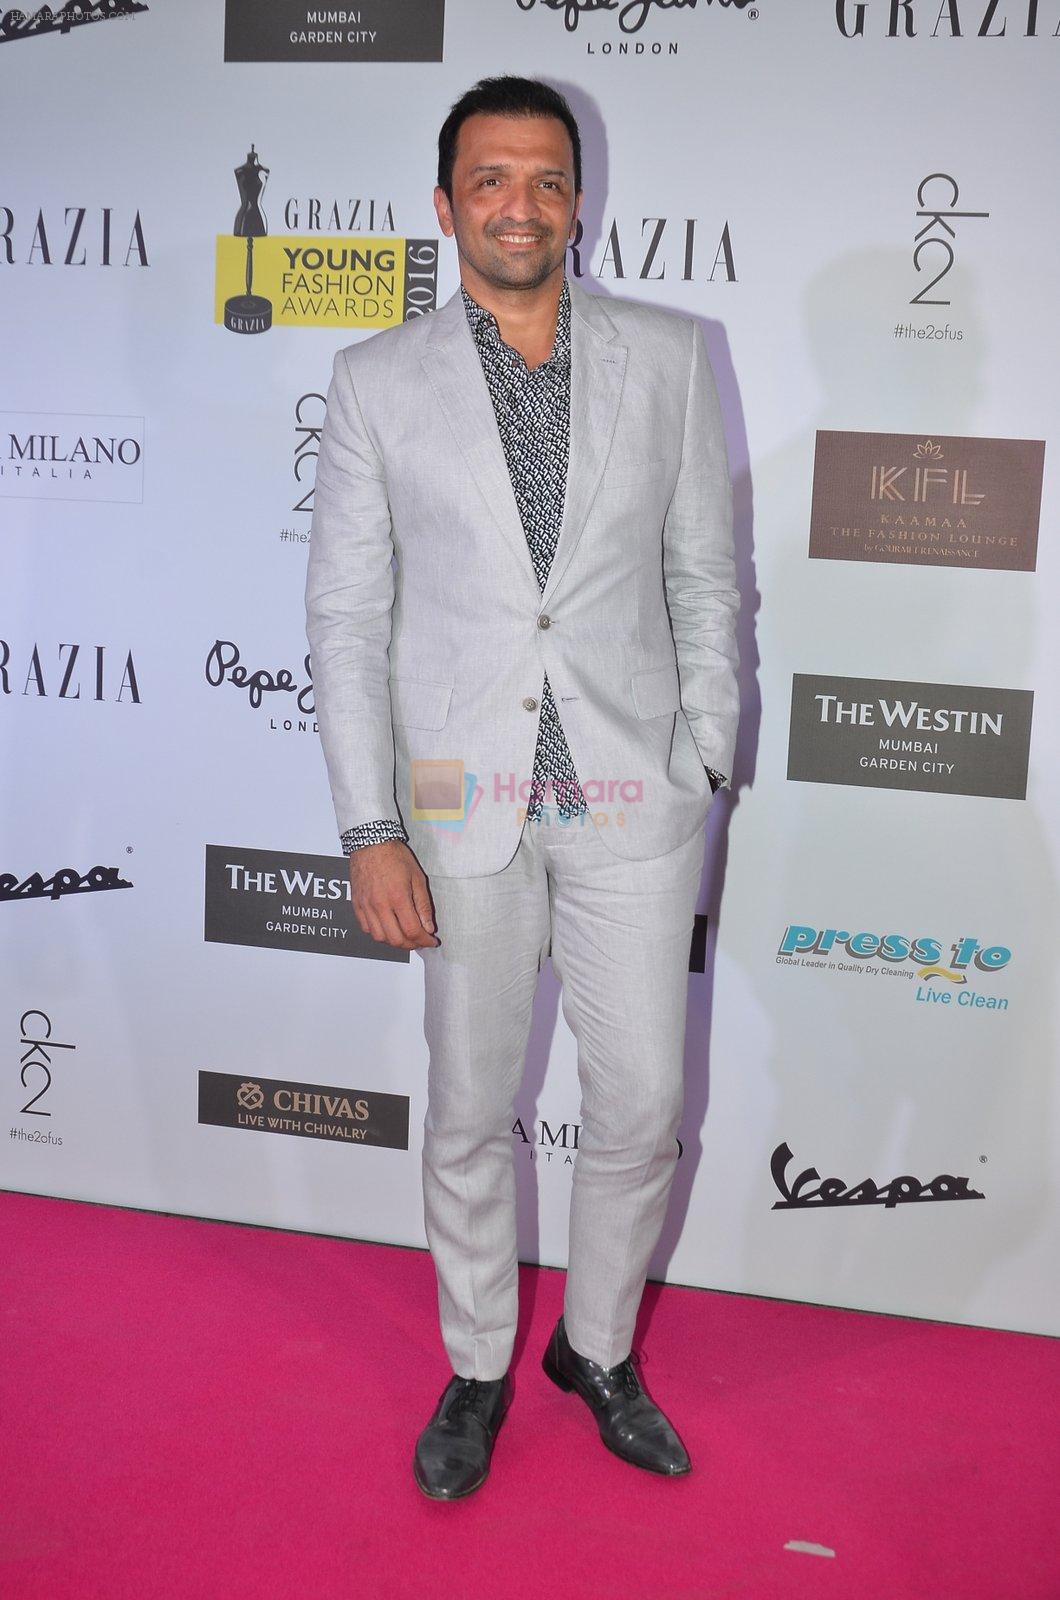 Atul Kasbekar at Grazia Young Fashion Awards 2016 Red Carpet on 7th April 2016